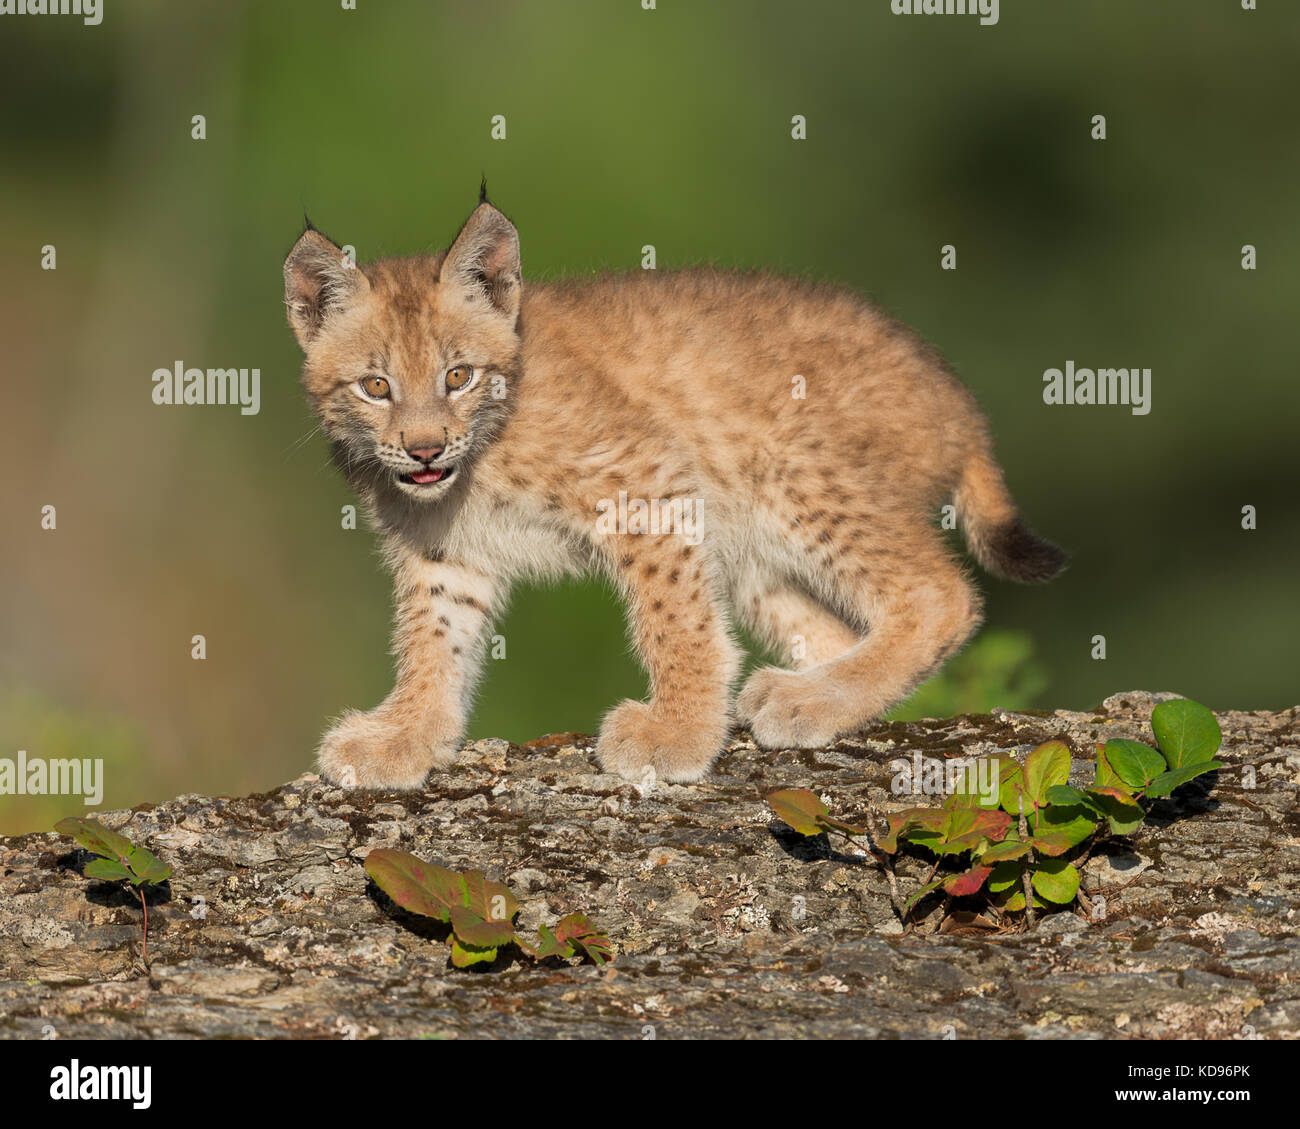 Siberian lynx kitten (Lynx lynx wrangeli) standing on rocky ledge Stock Photo